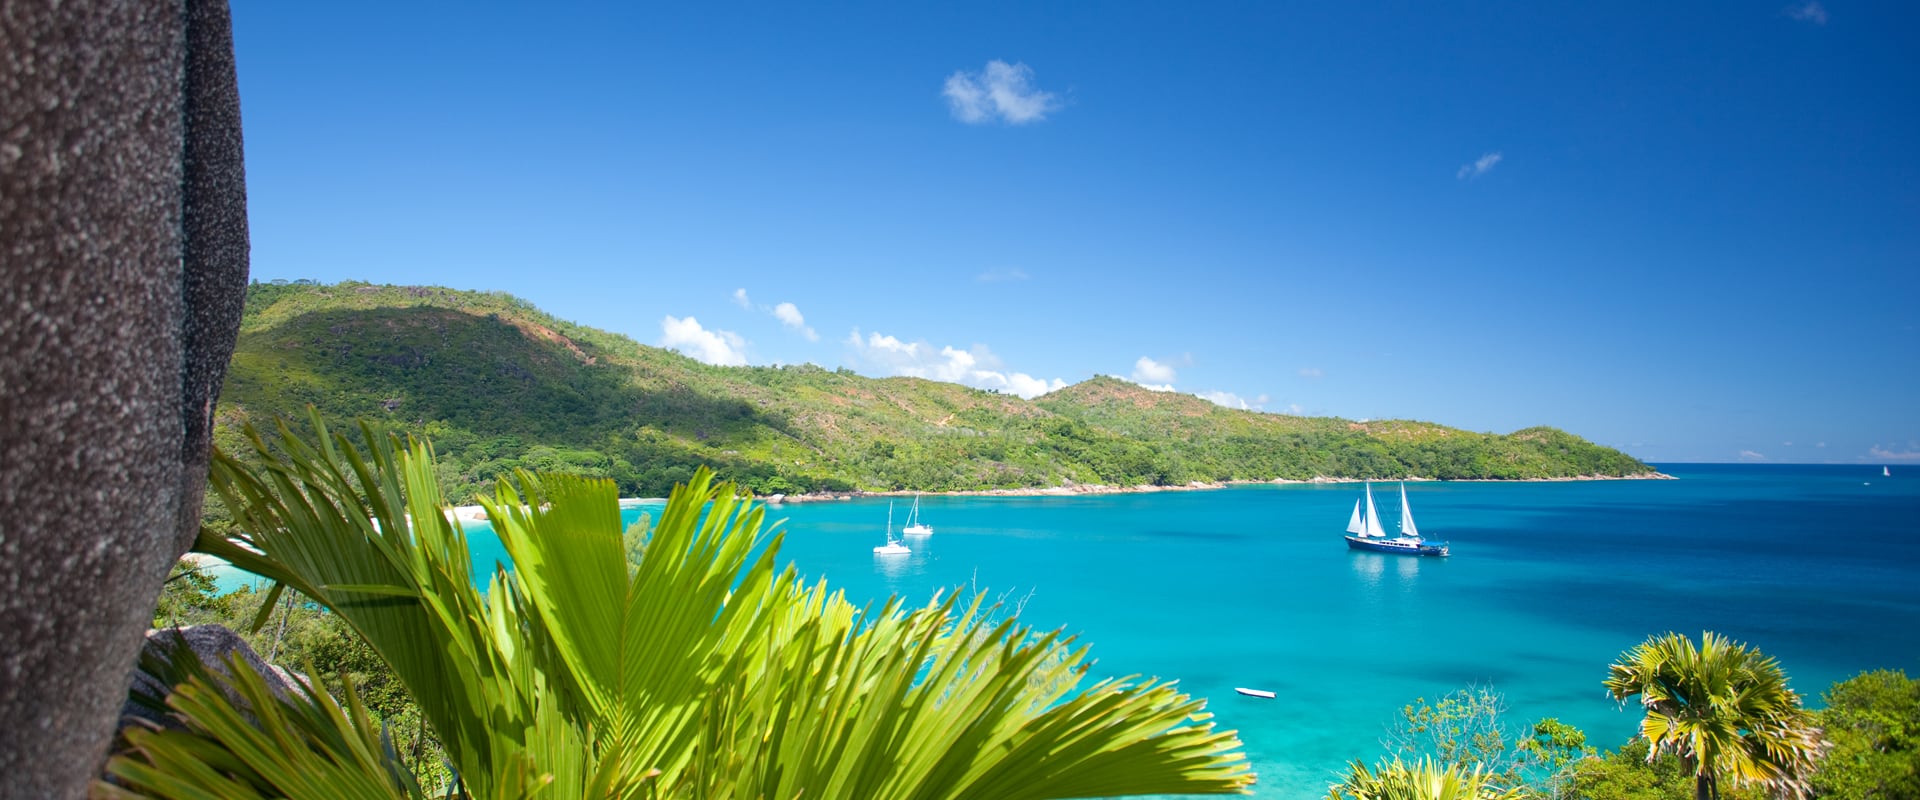 6 Small Ship Cruises in Seychelles - LiveAboard.com